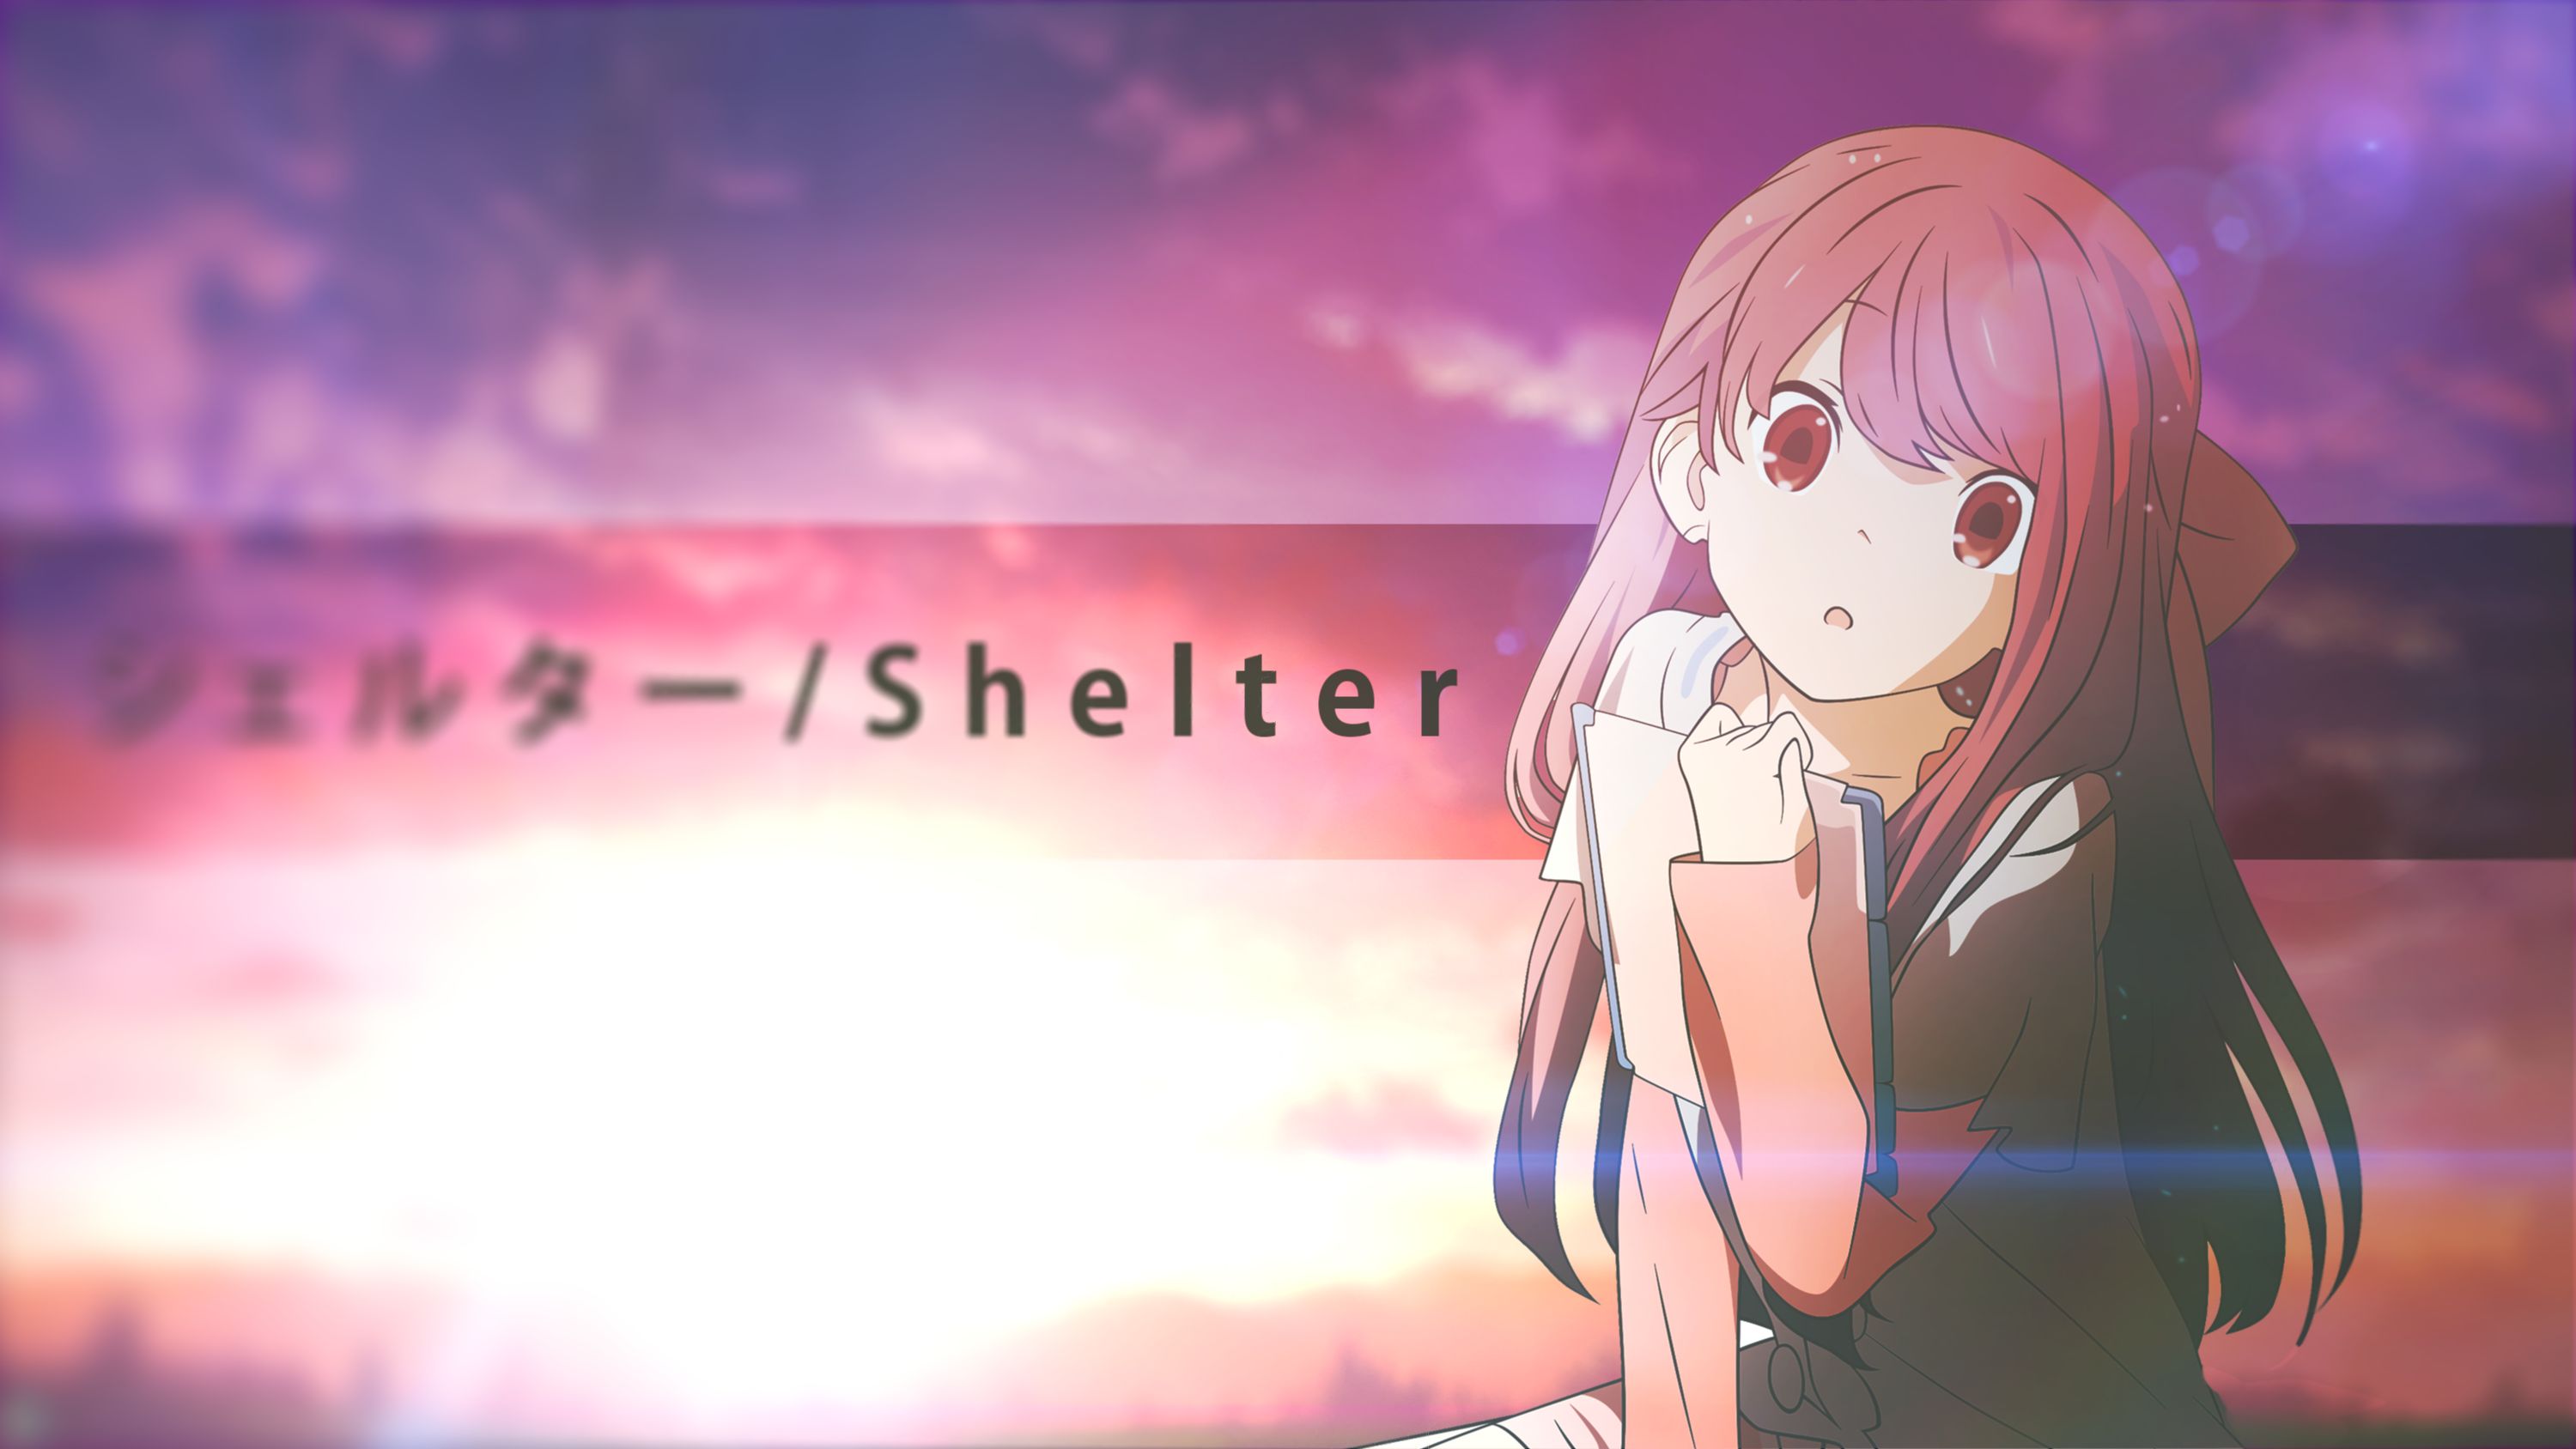 904708 descargar imagen animado, shelter, refugio (anime): fondos de pantalla y protectores de pantalla gratis